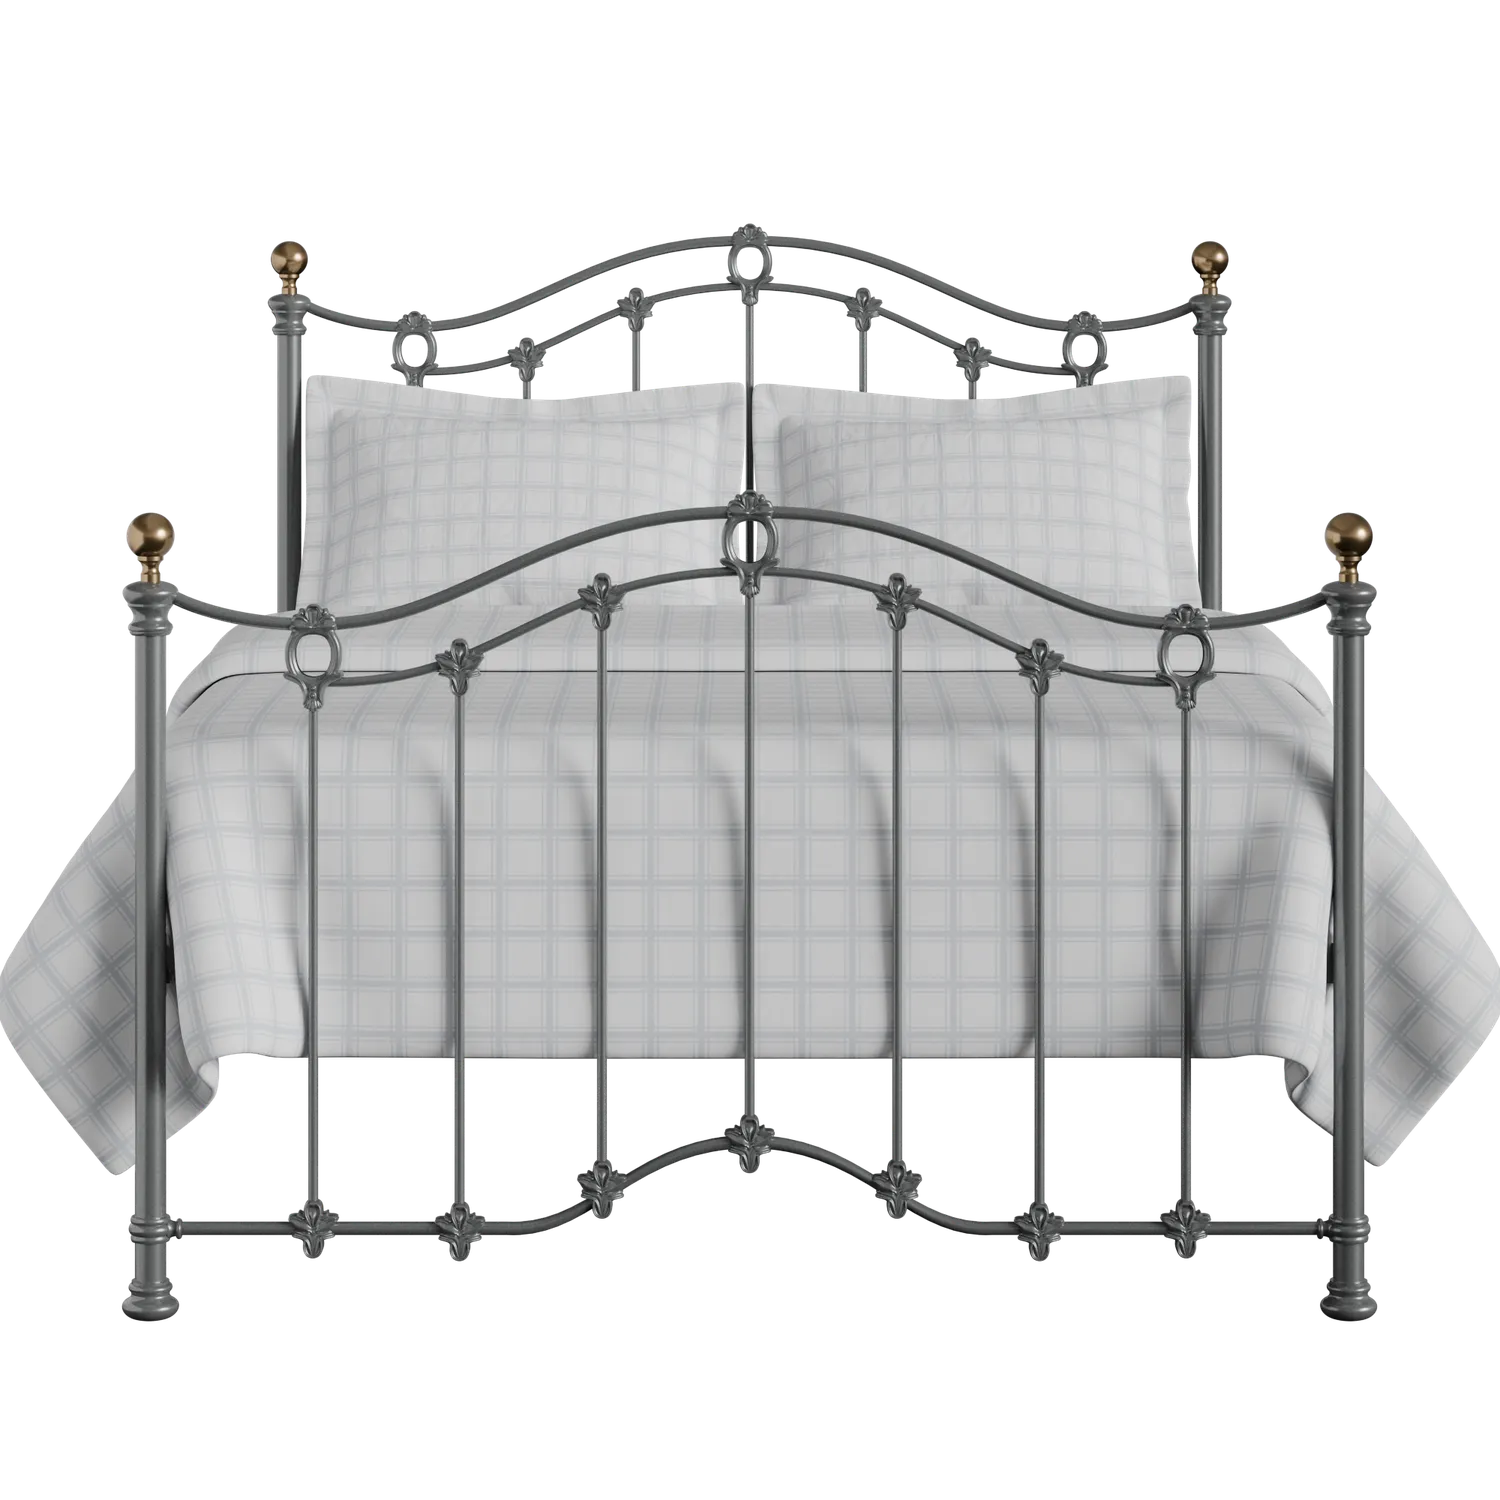 Clarina iron/metal bed in pewter